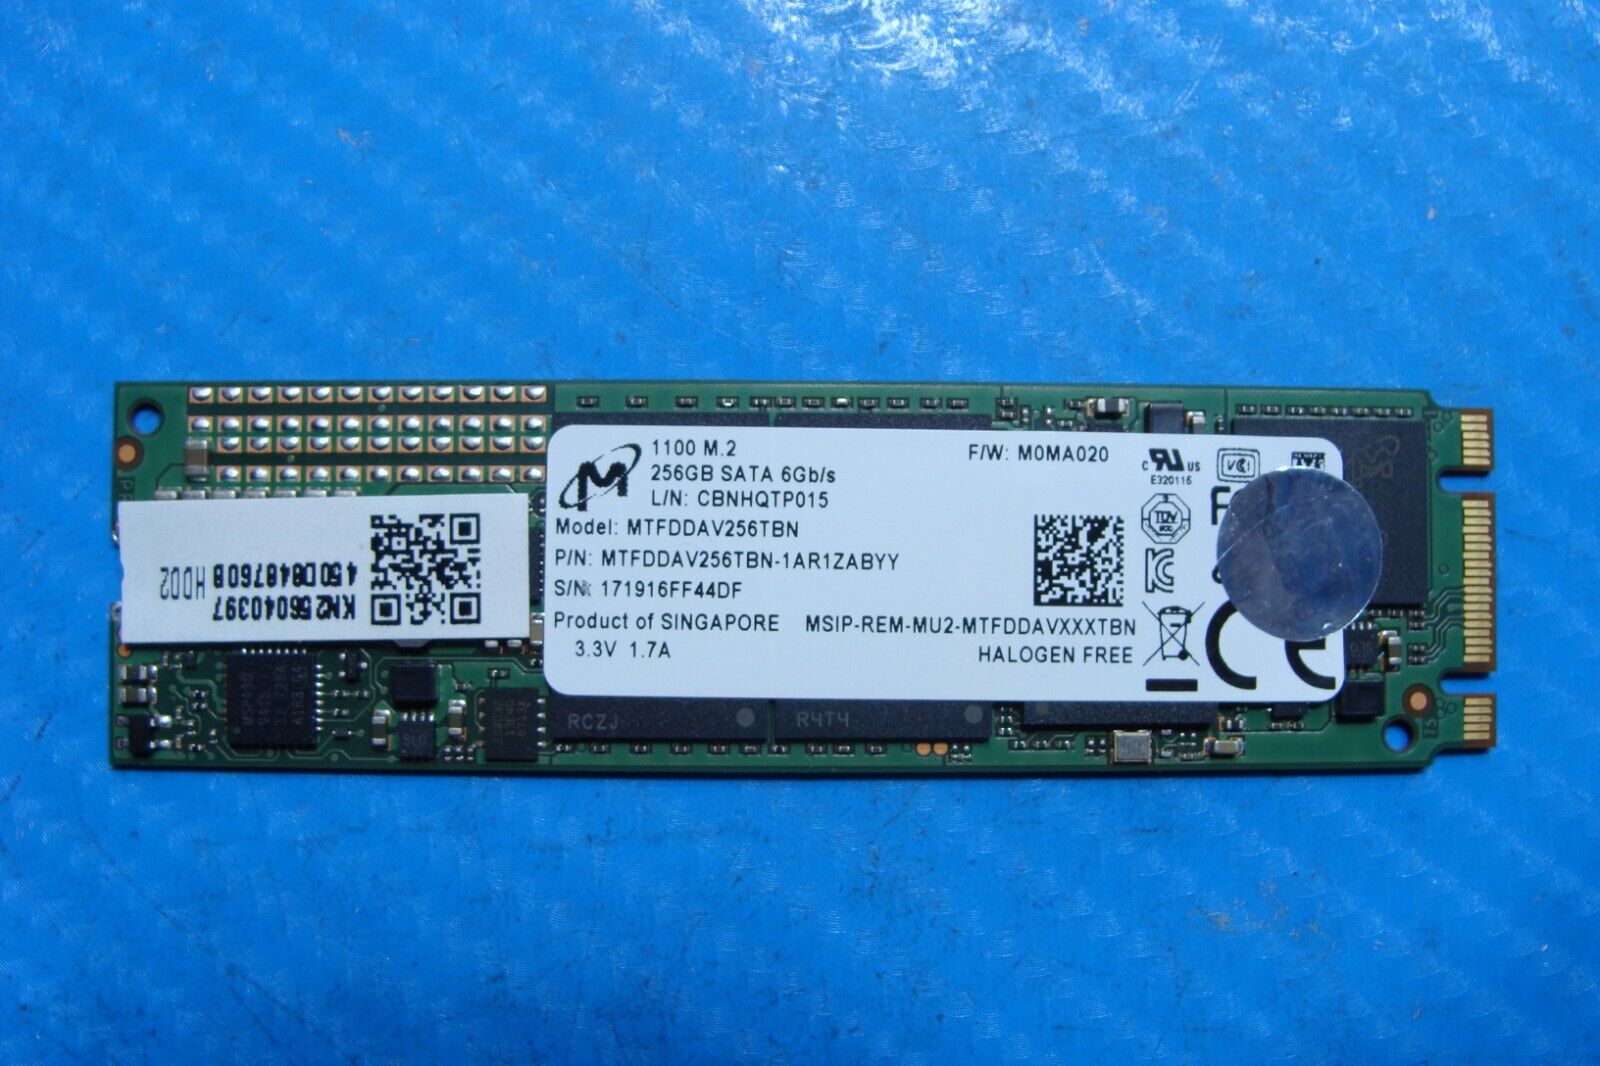 Acer E5-576G-5762 Micron 256GB Sata M.2 SSD Solid State Drive MTFDDAV256TBN